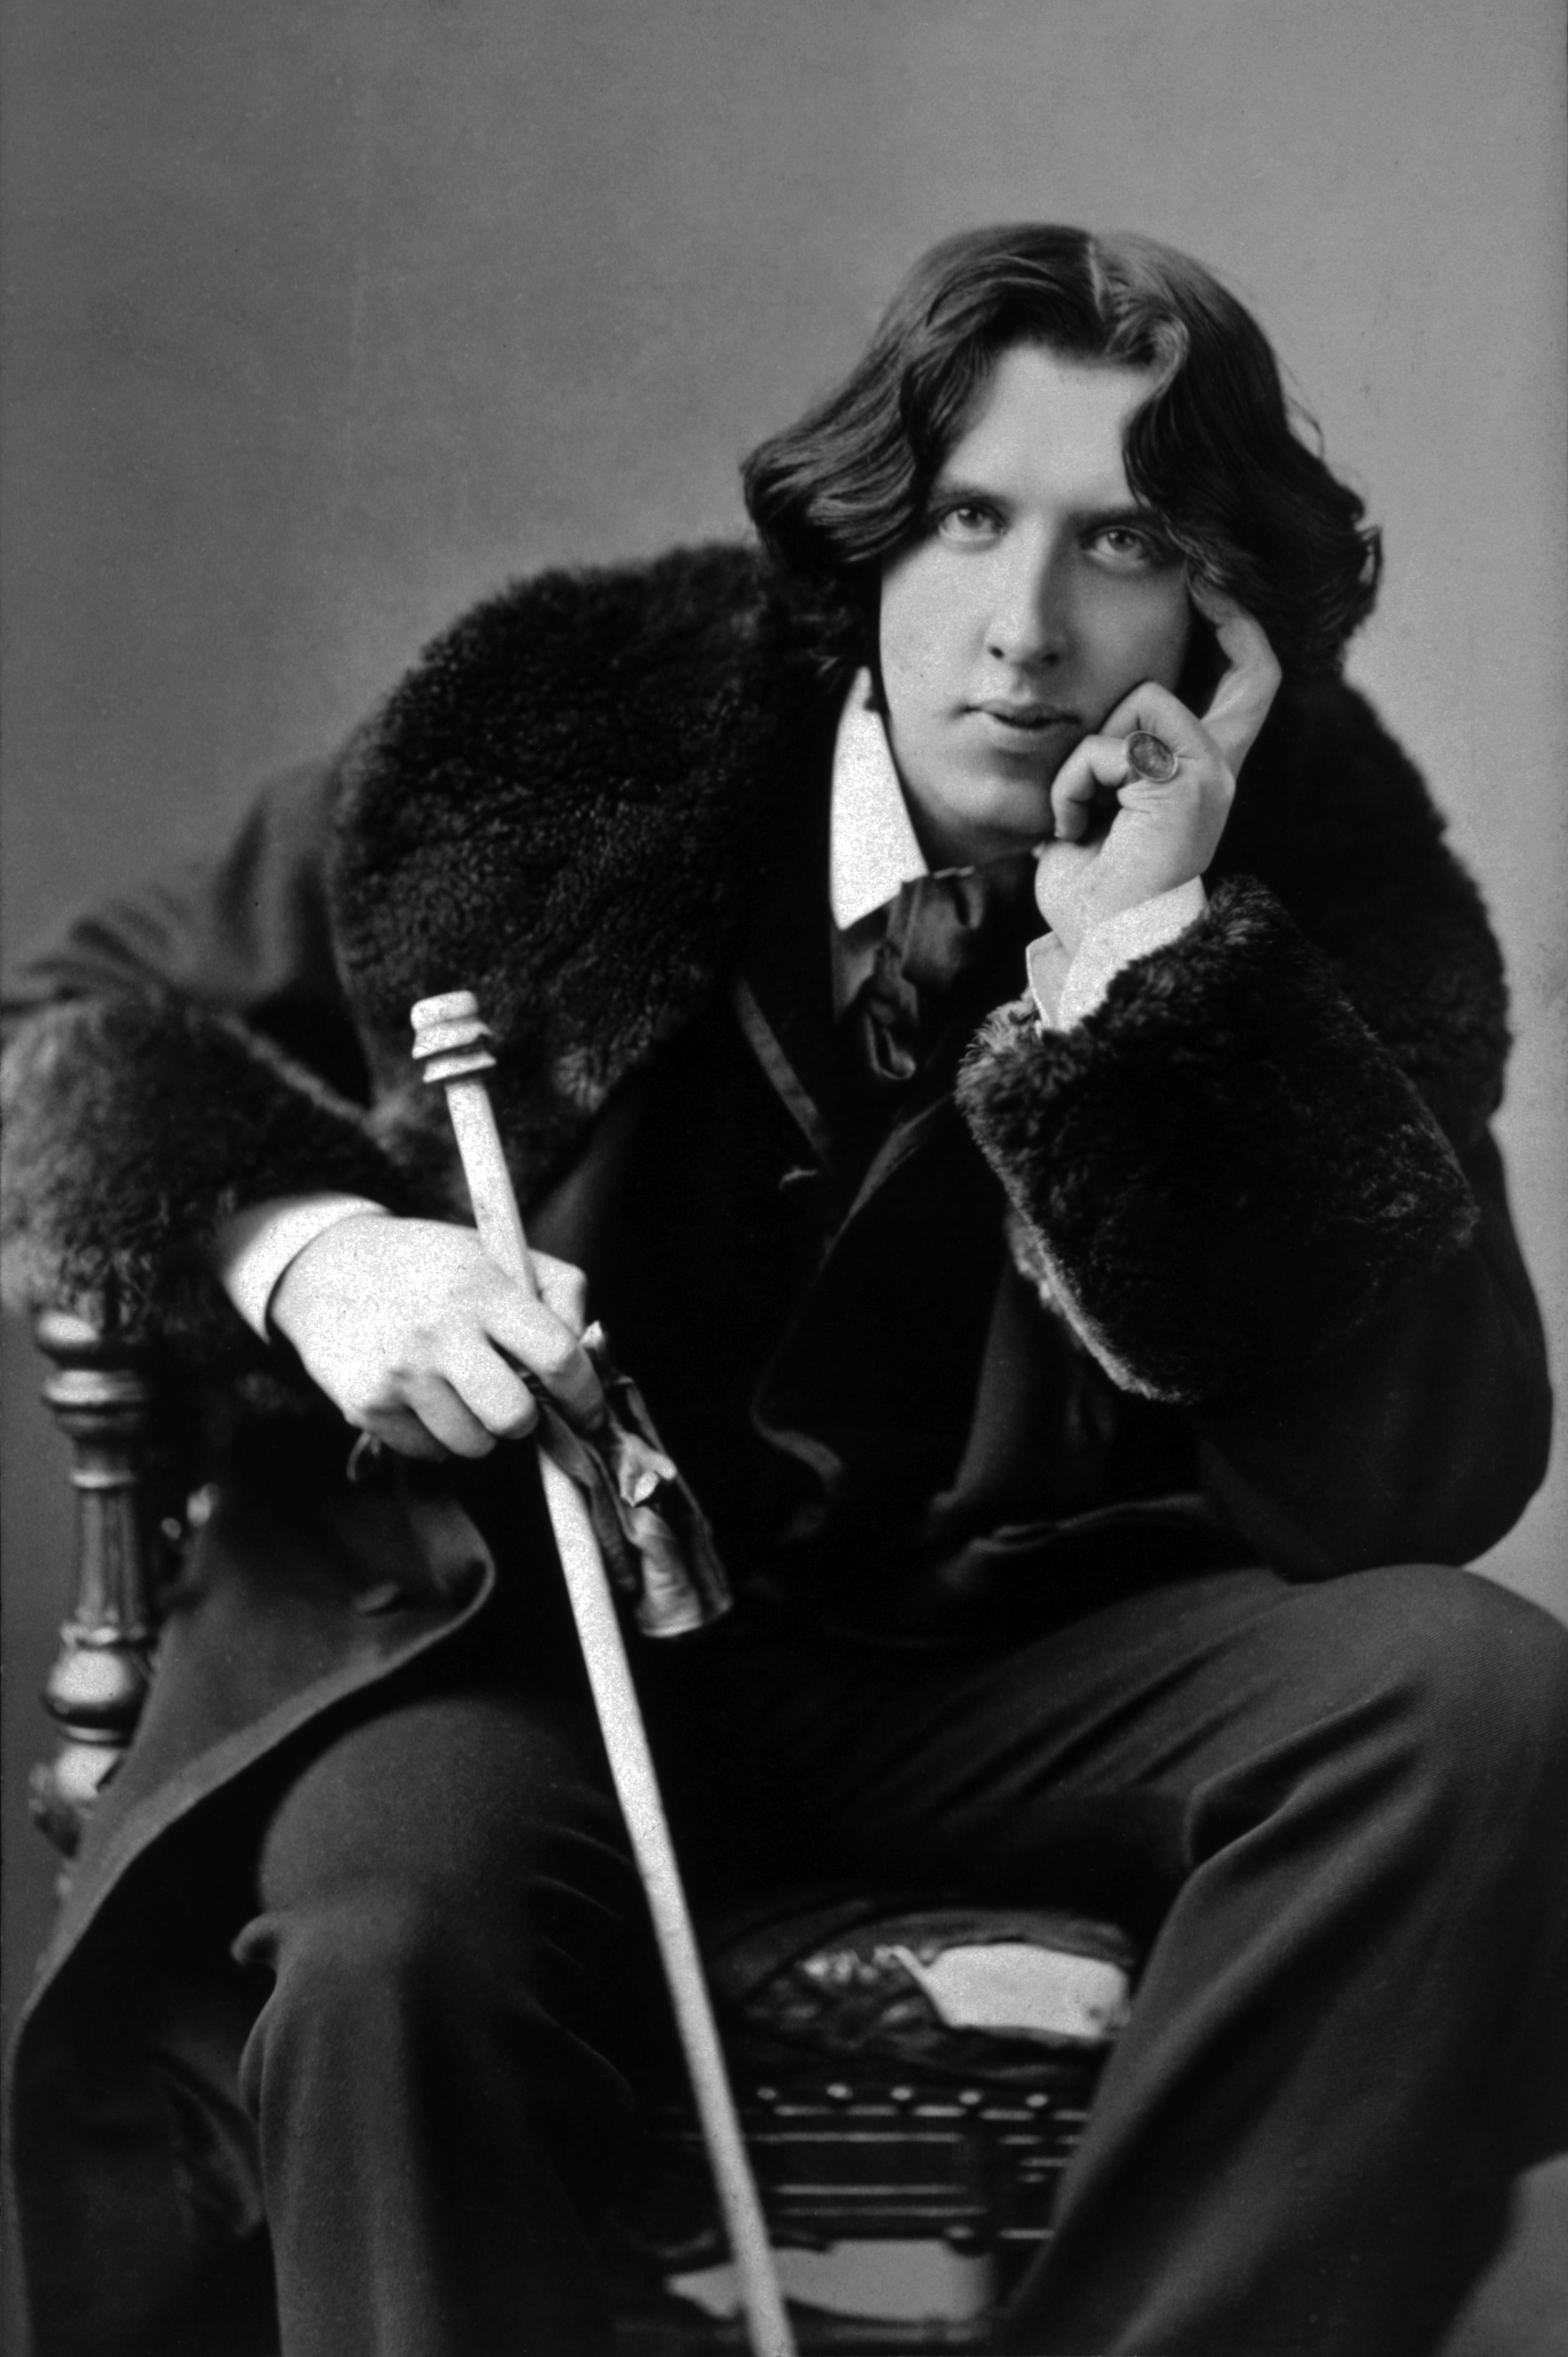 Oscar Wilde Tours